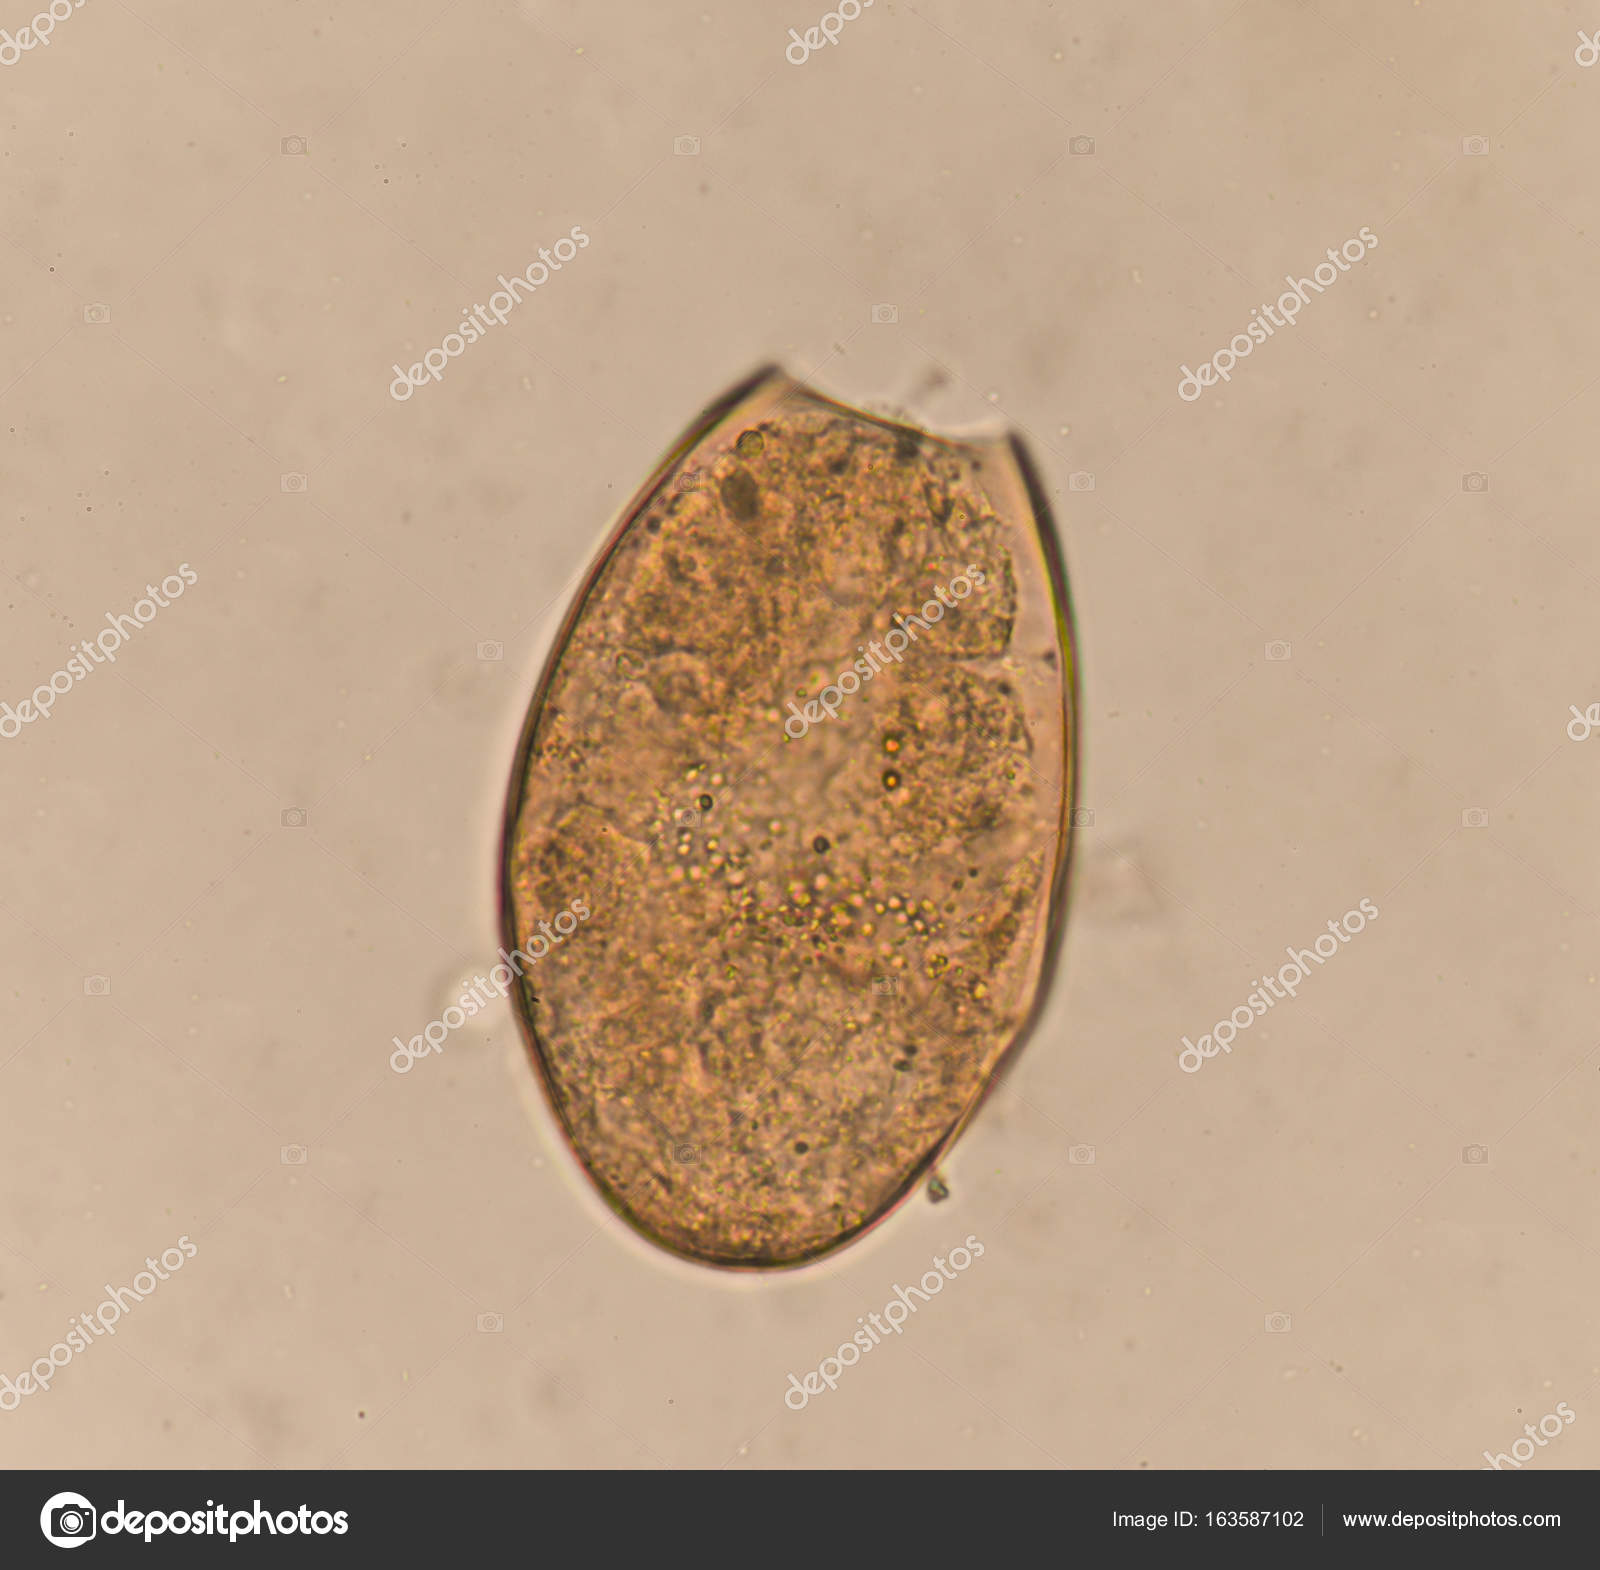 Egg parasite in stool human — Stock Photo © toeytoey #1635871021600 x 1570